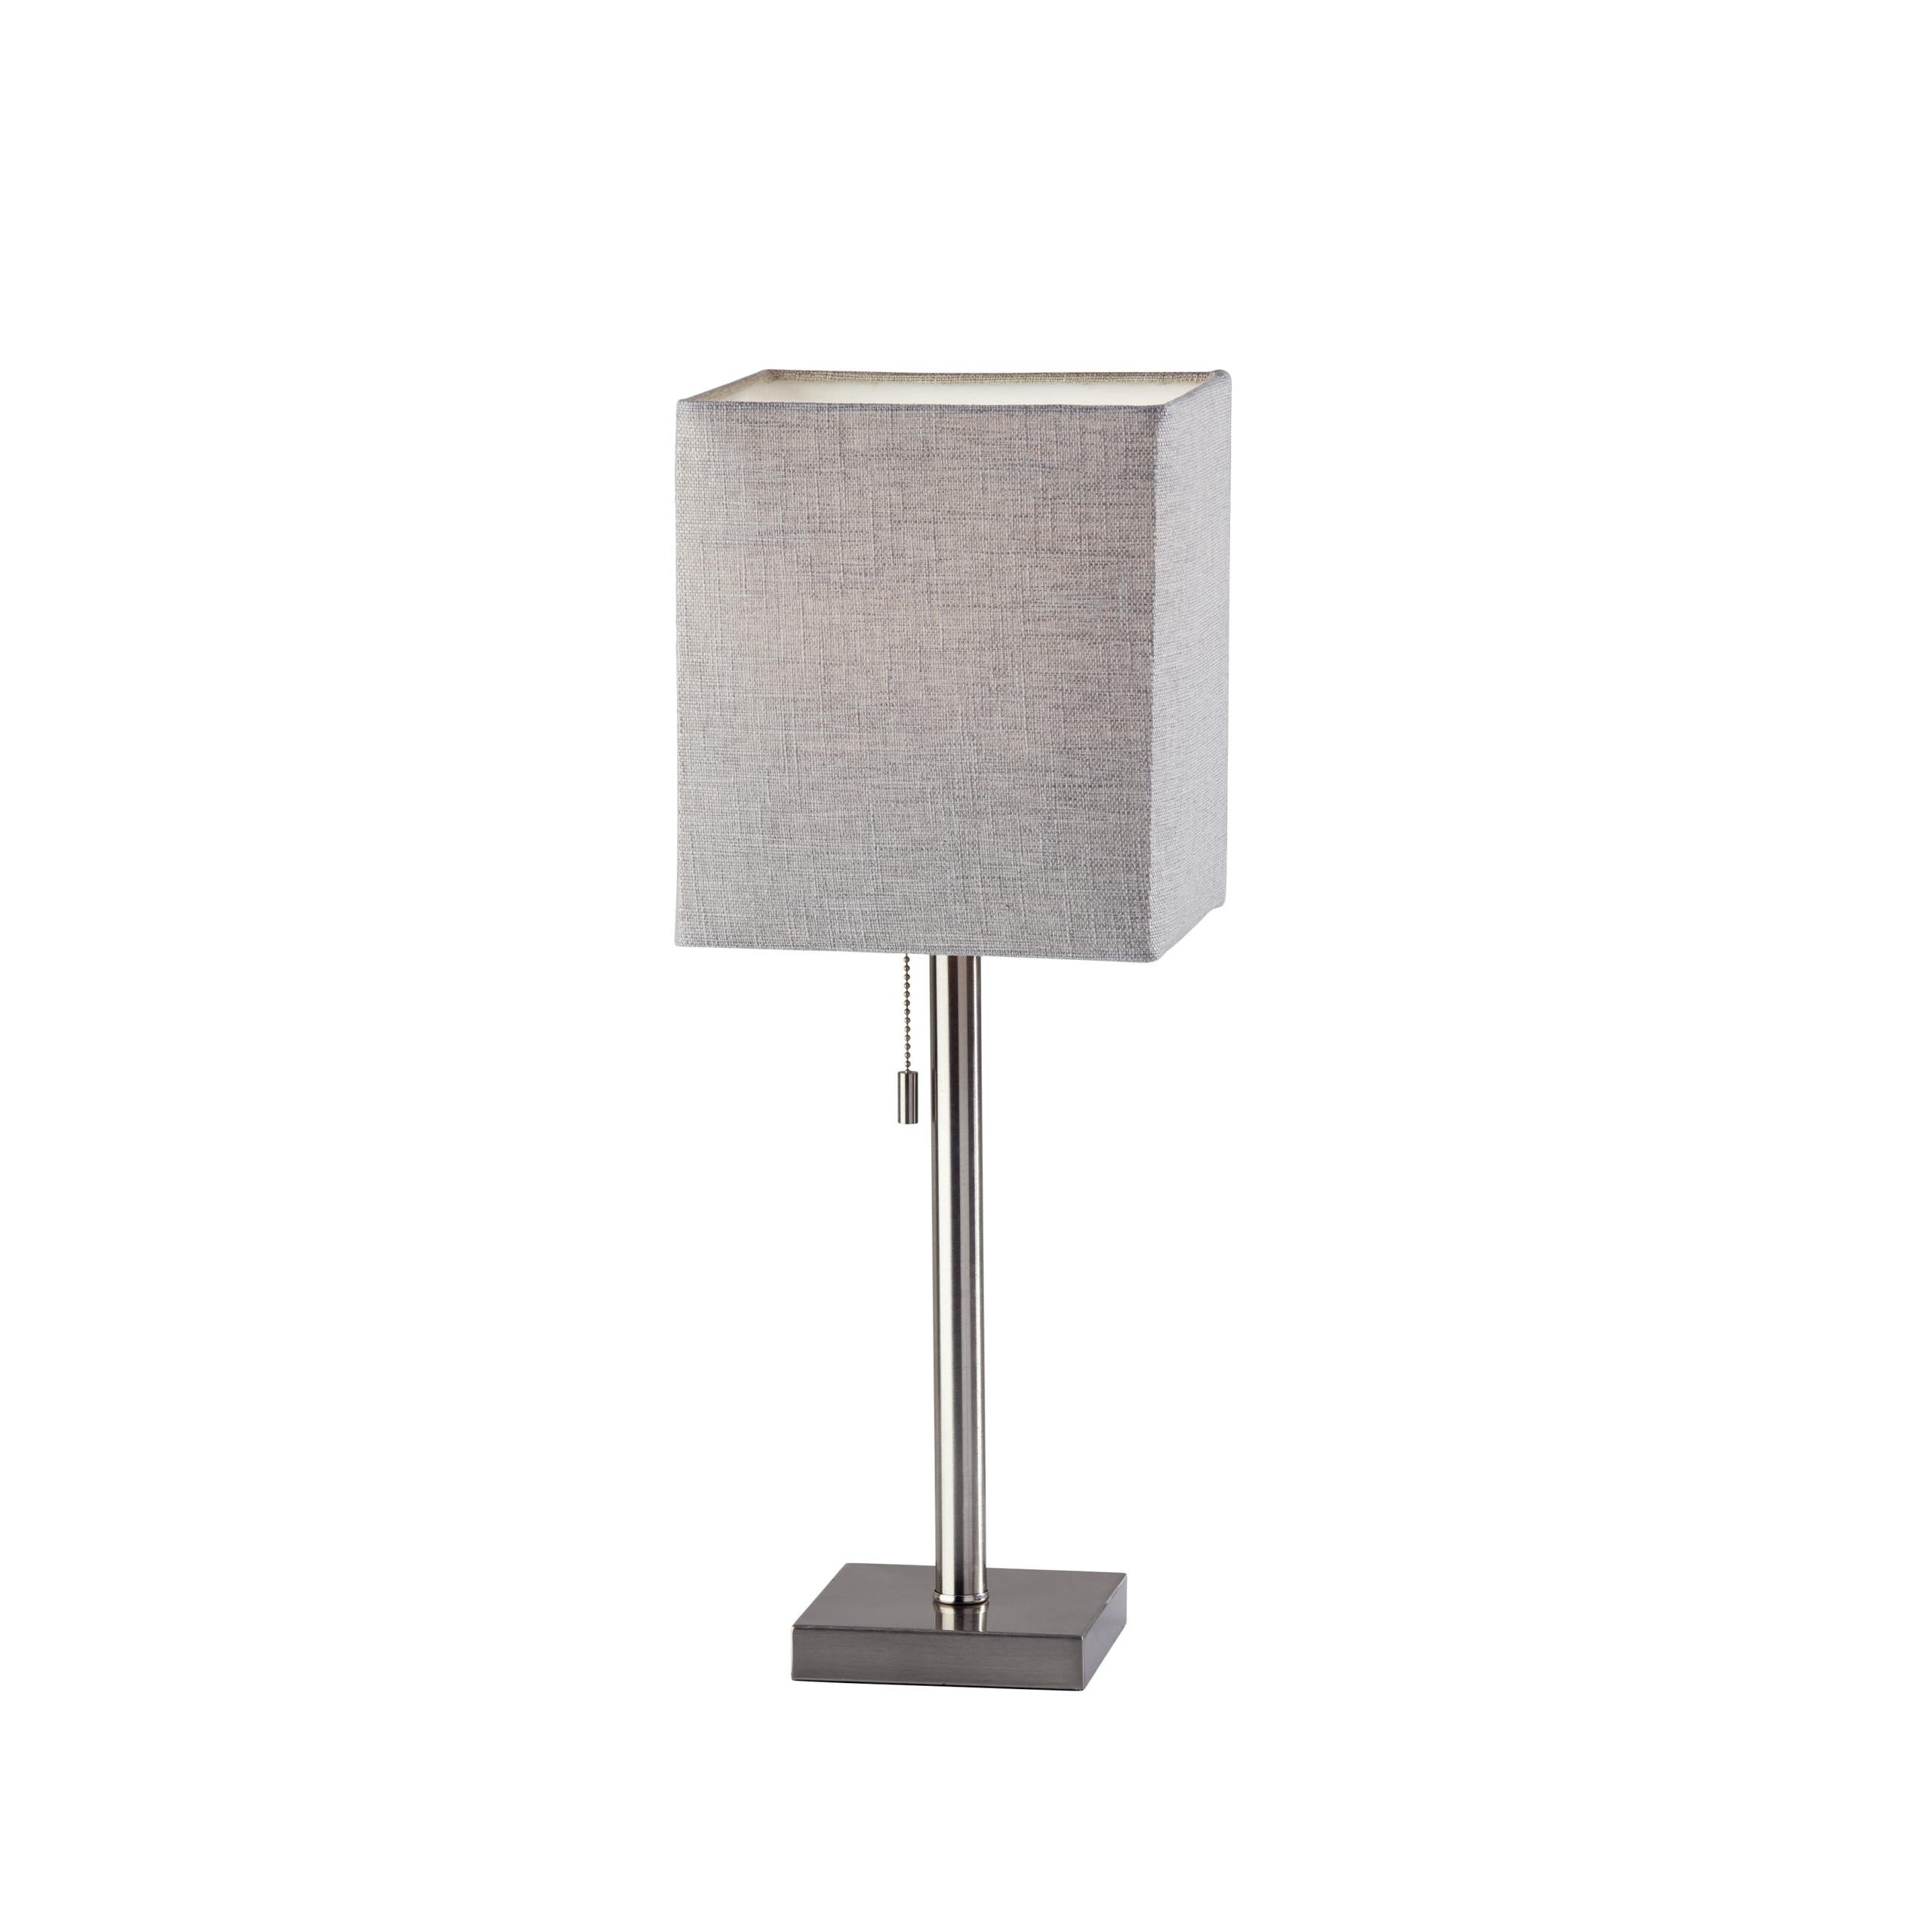 Adesso Estelle Table Lamp - Steel